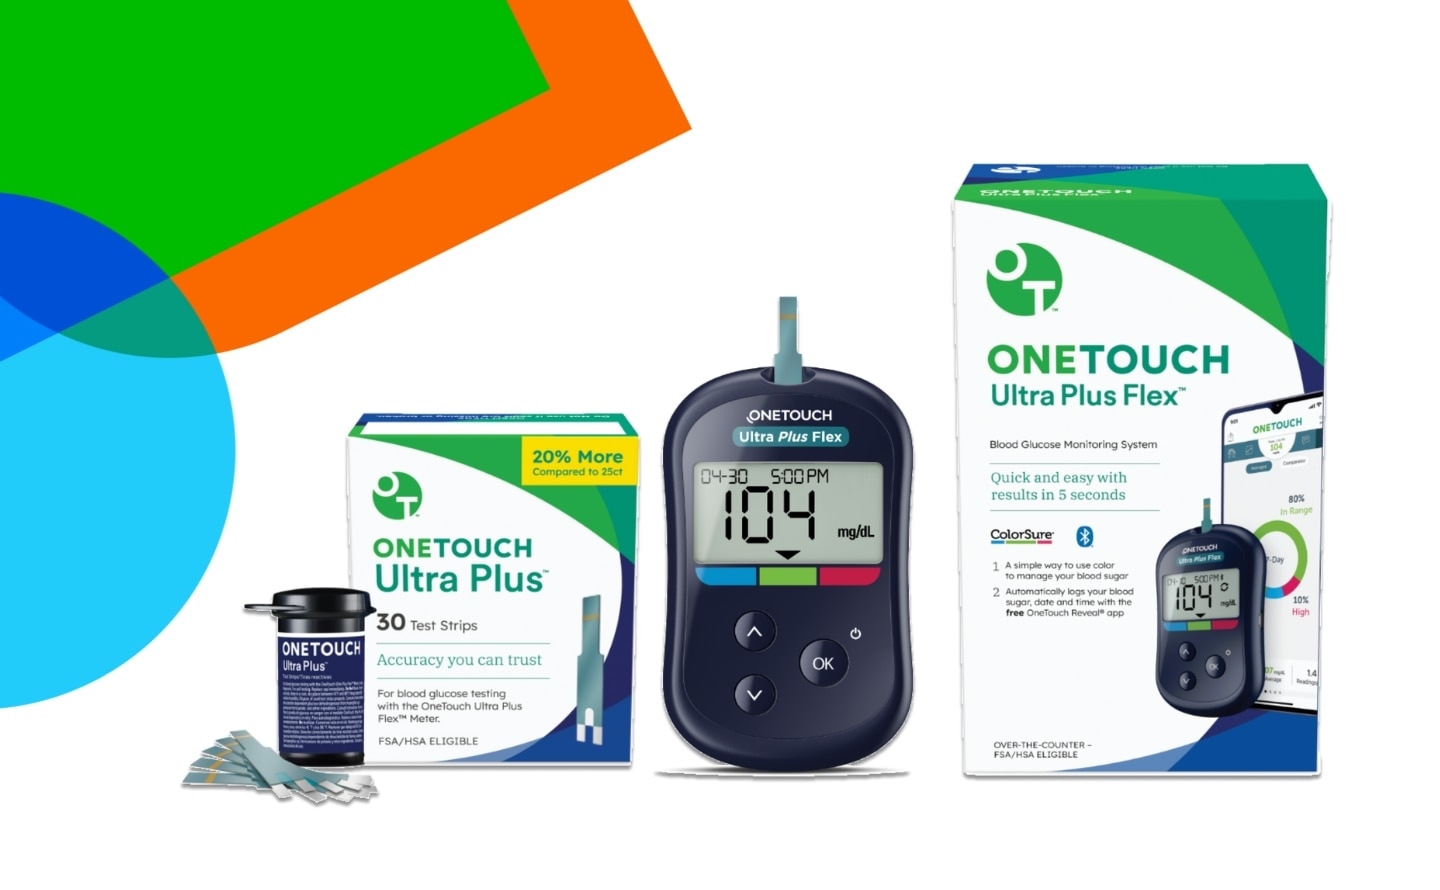 OneTouch Verio Flex Blood Glucose METER Kit